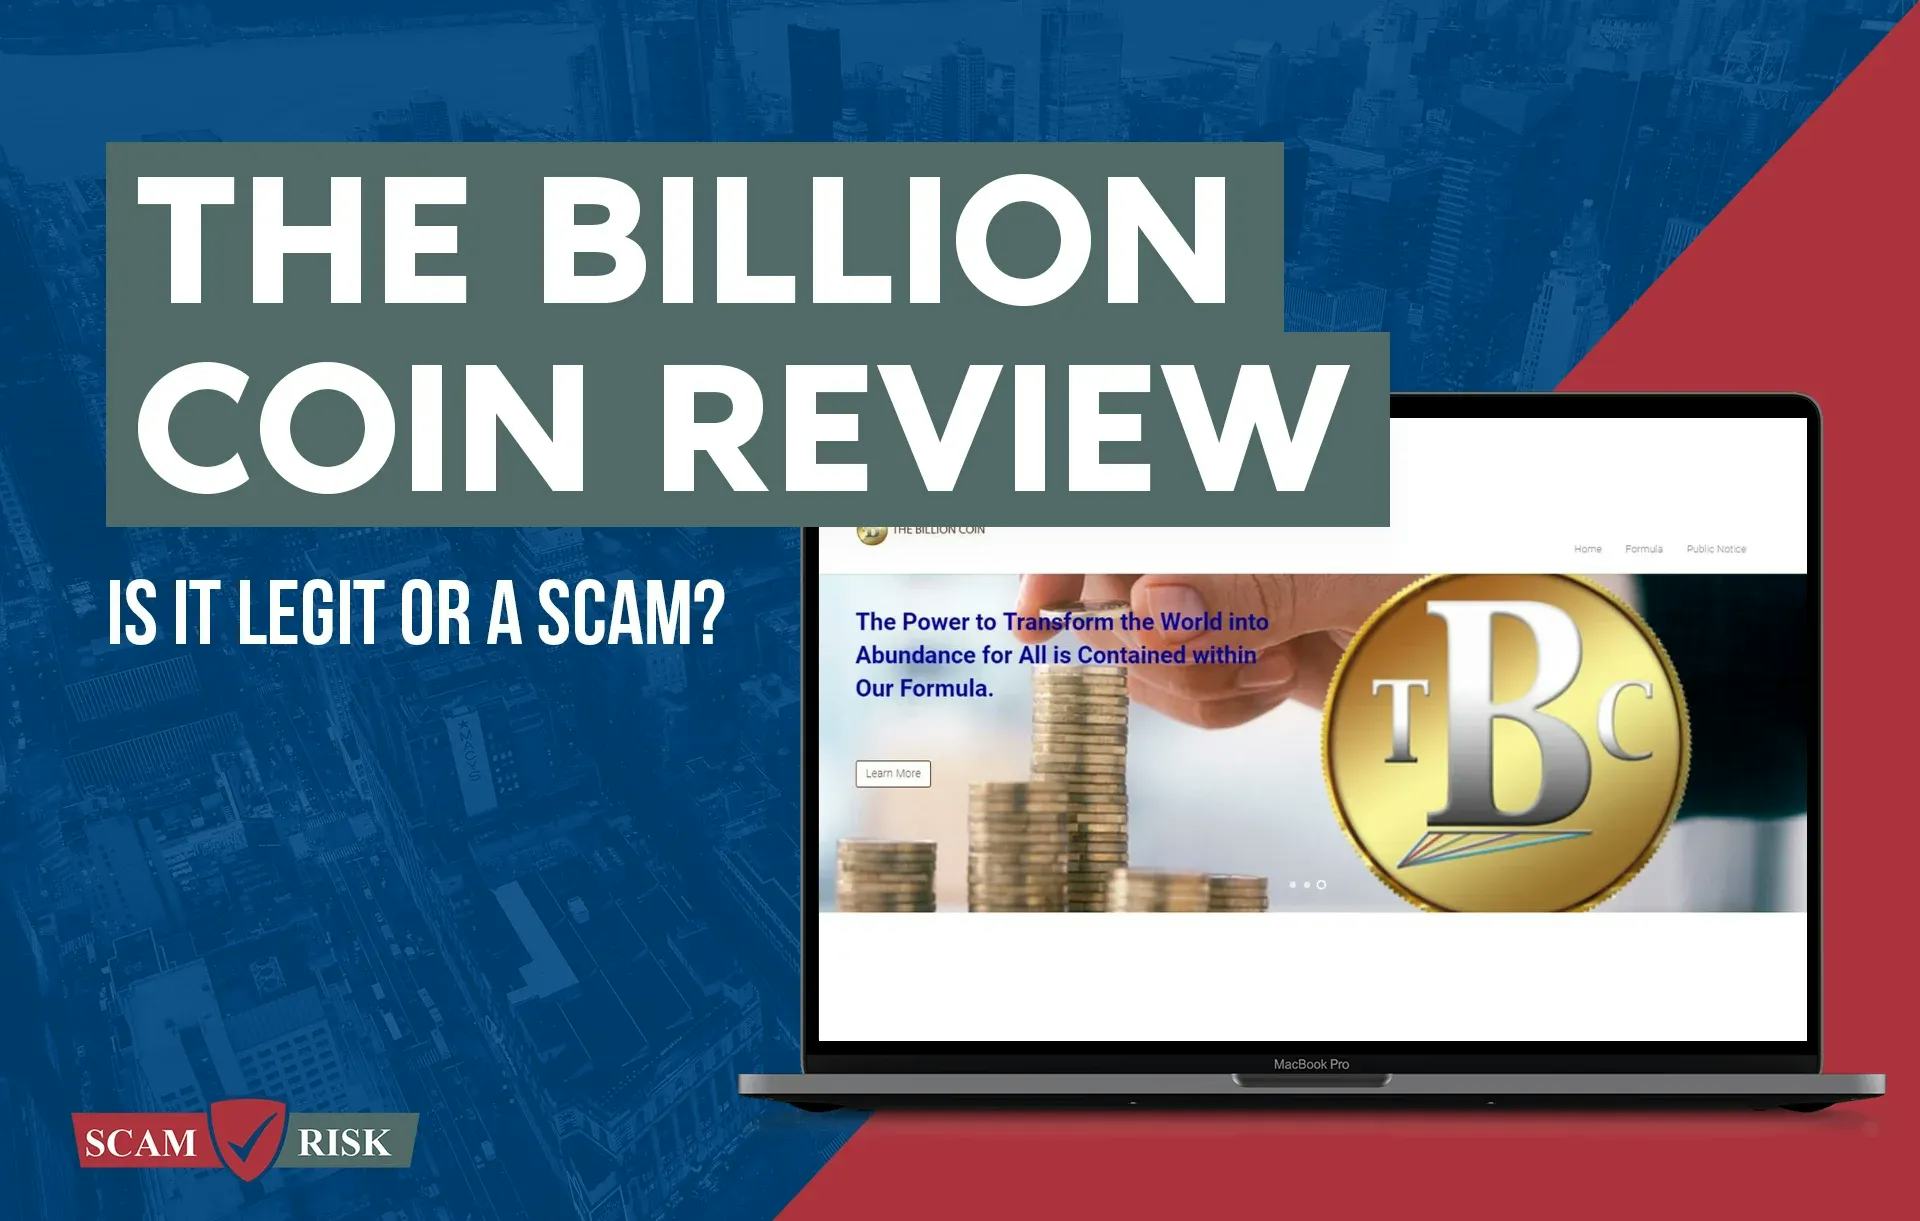 The Billion Coin